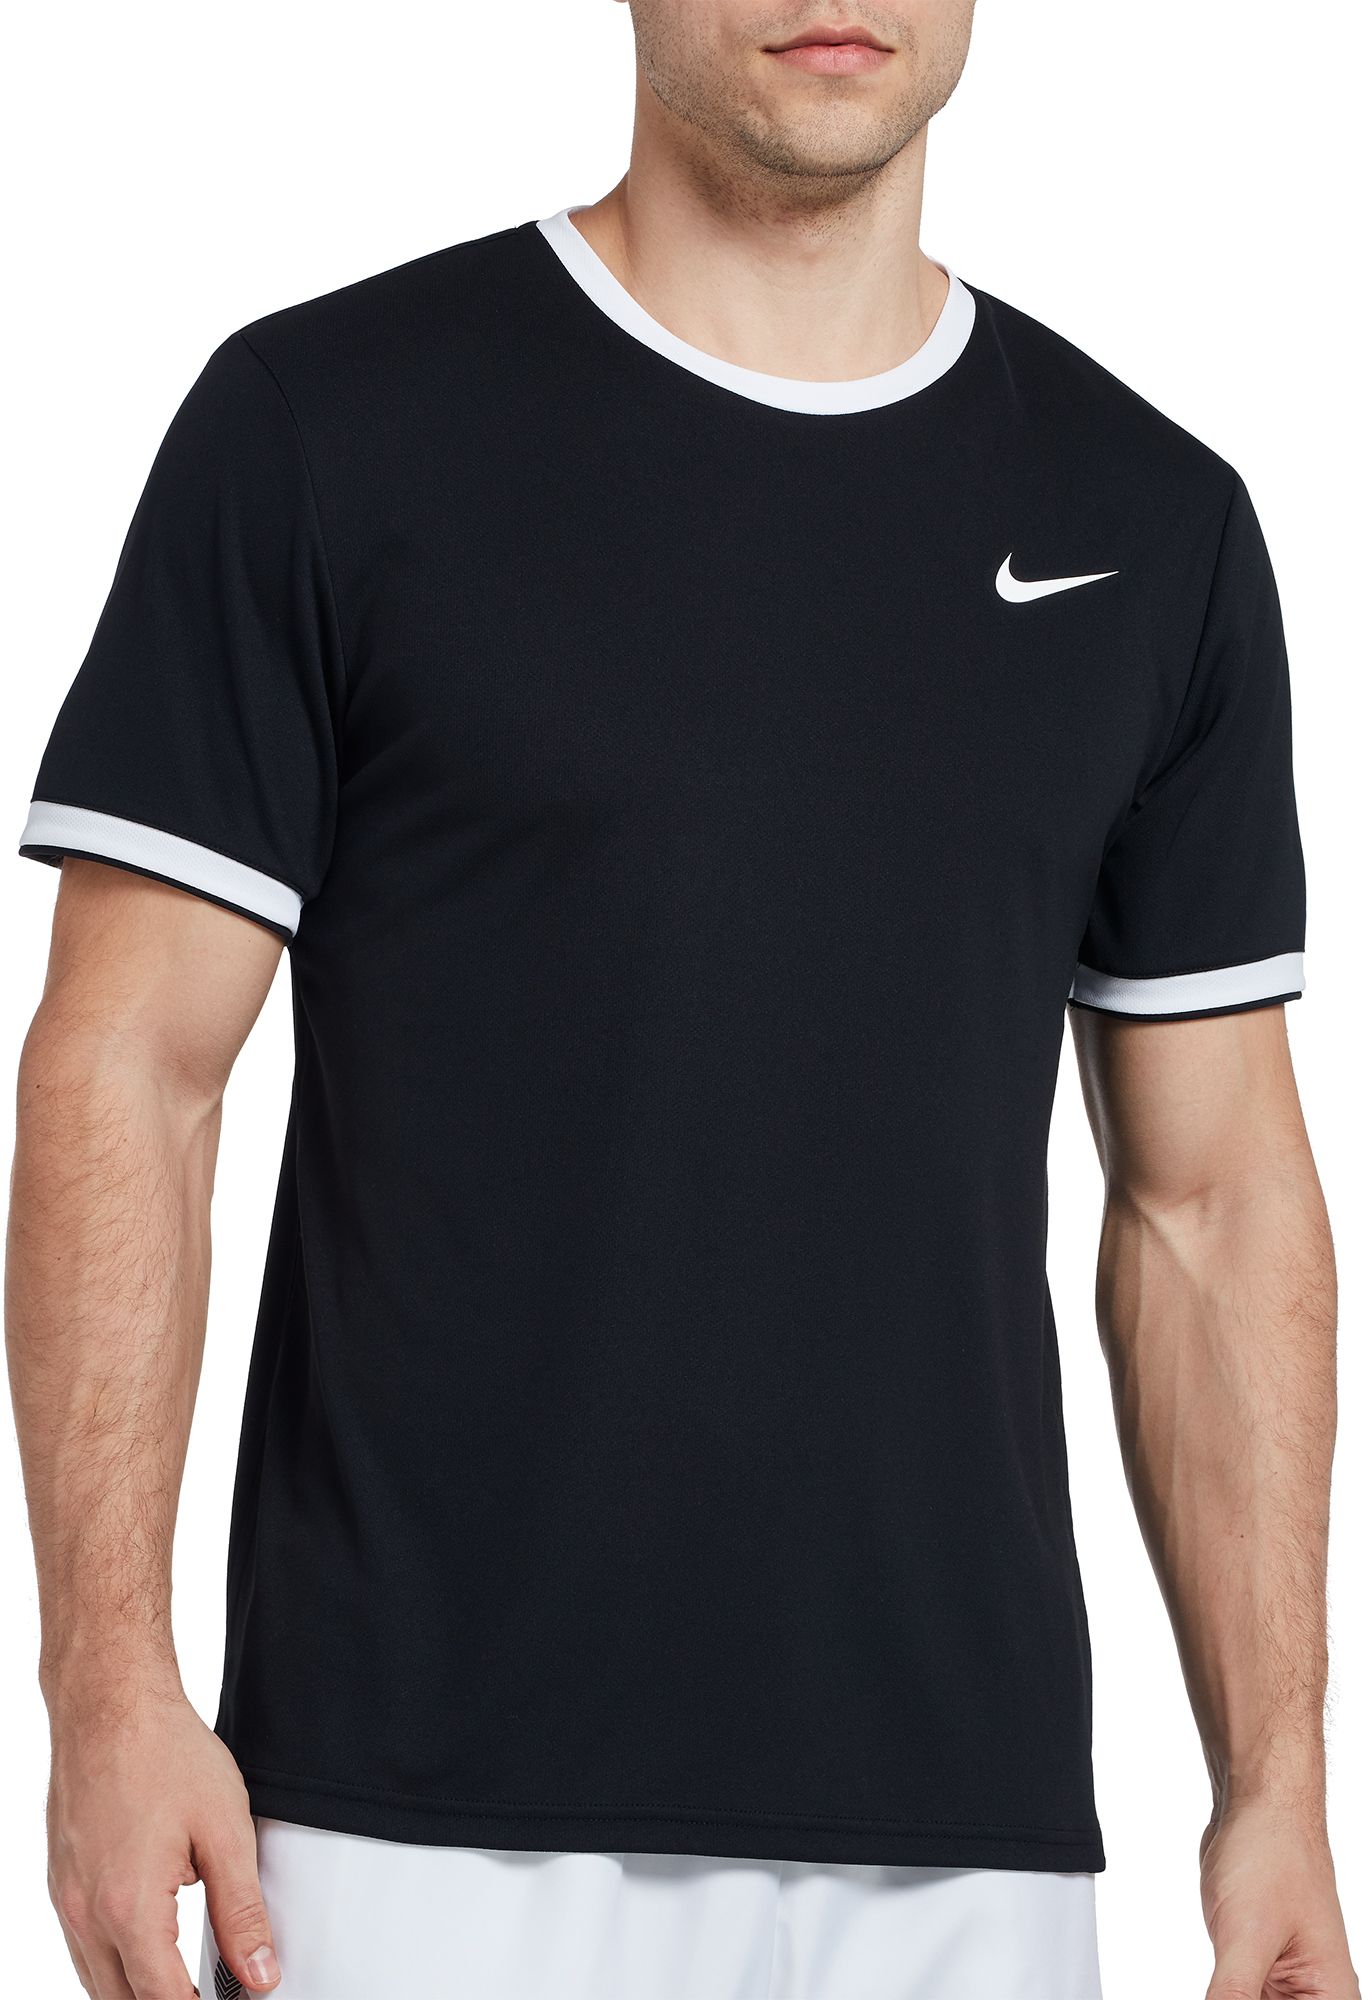 Nike Men's Court Dry Tennis Shirt - .97